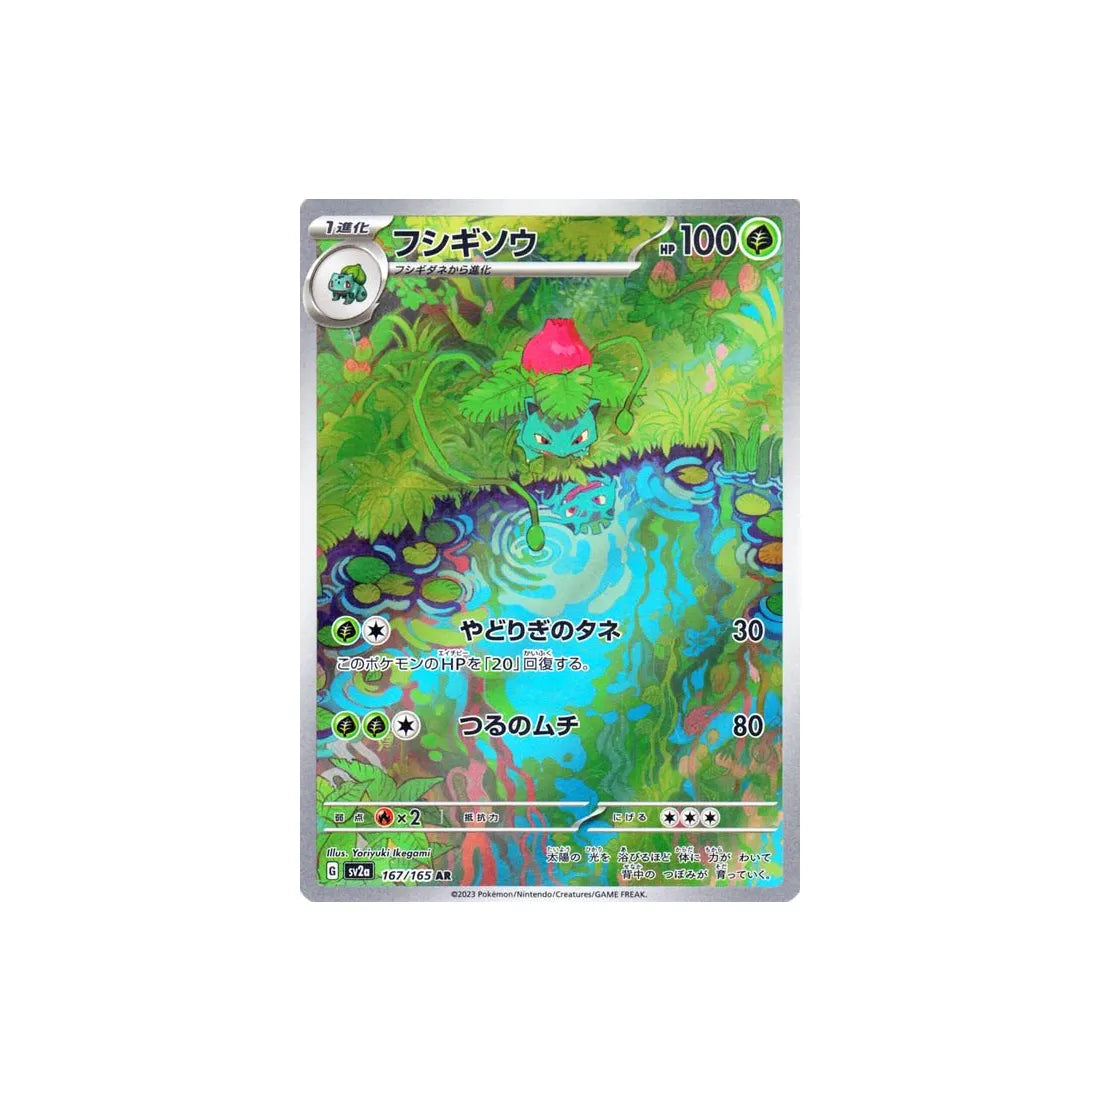 herbizarre-carte-pokemon-pokemon-151-sv2a-167